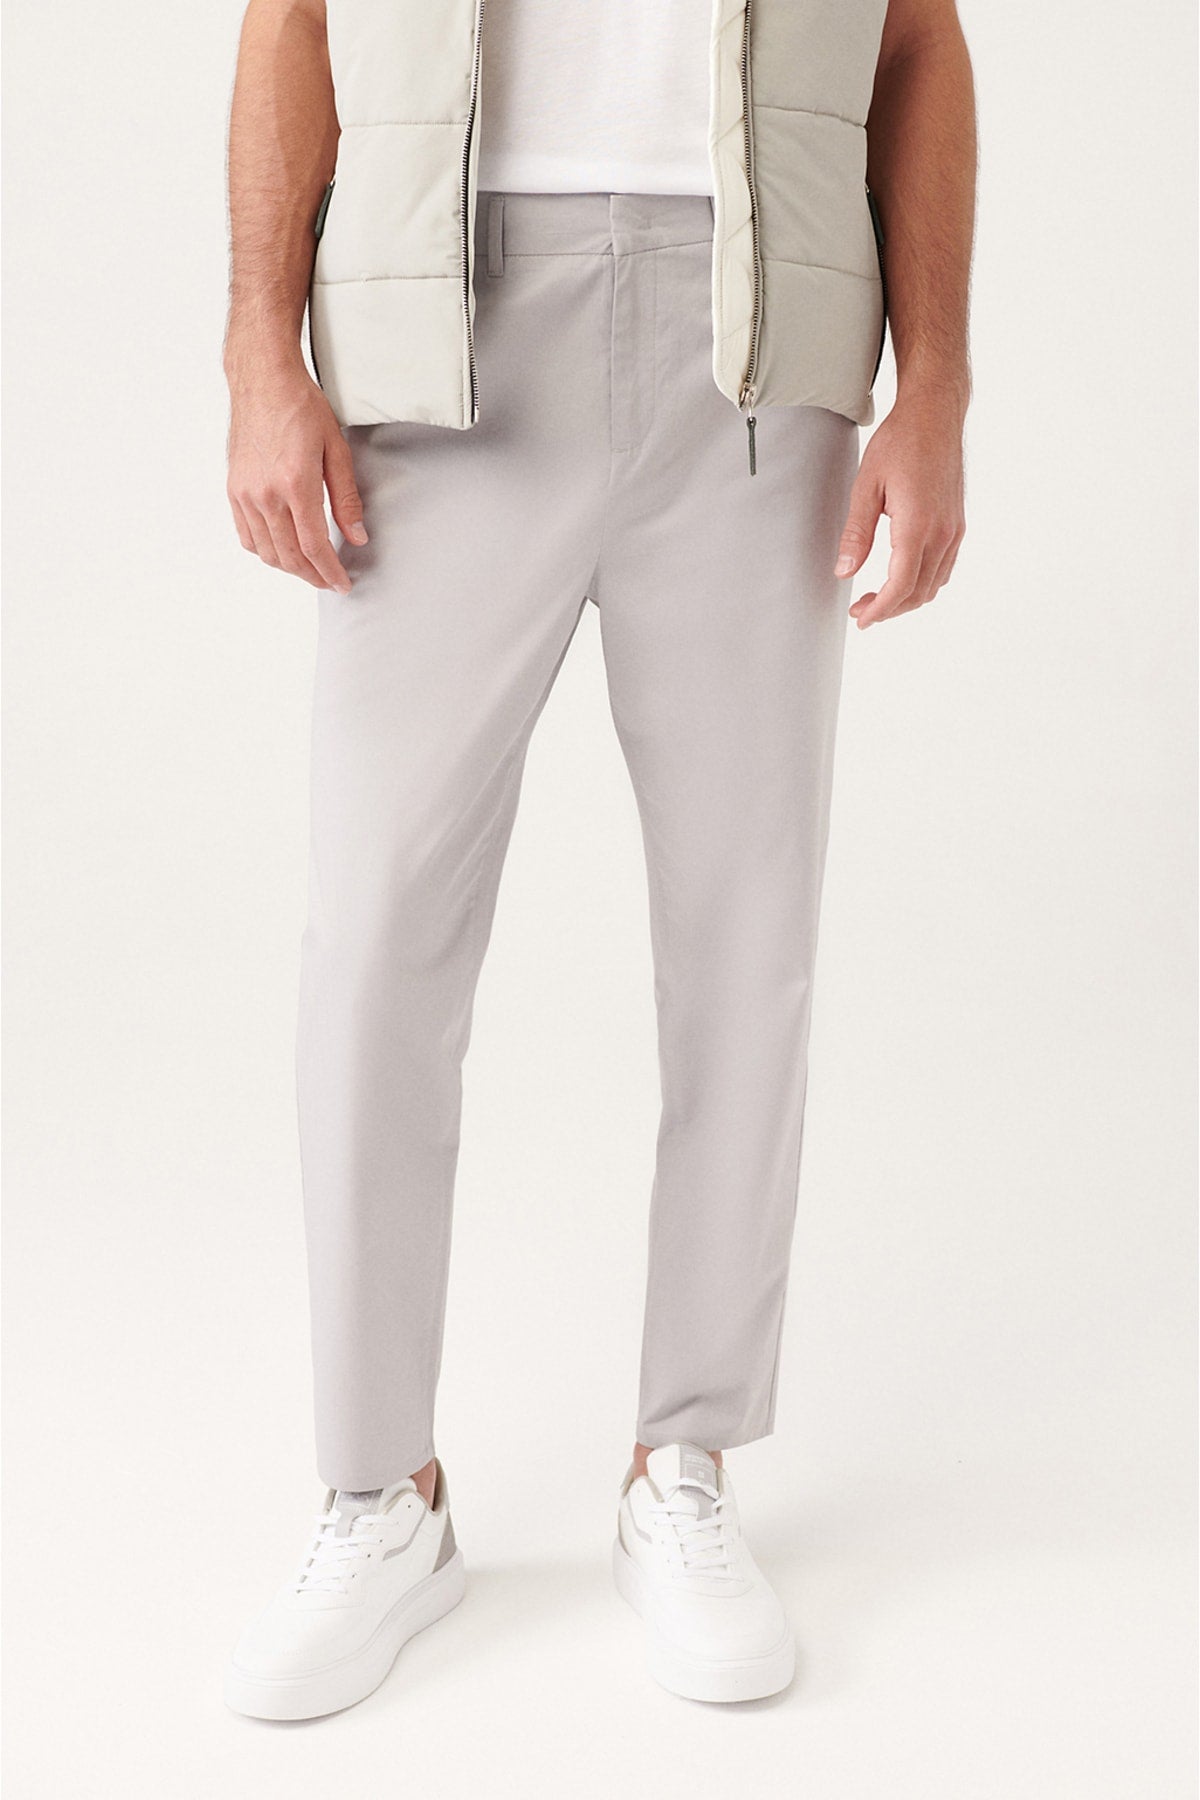 Men's Gray Woven Chino Pants A31y3004